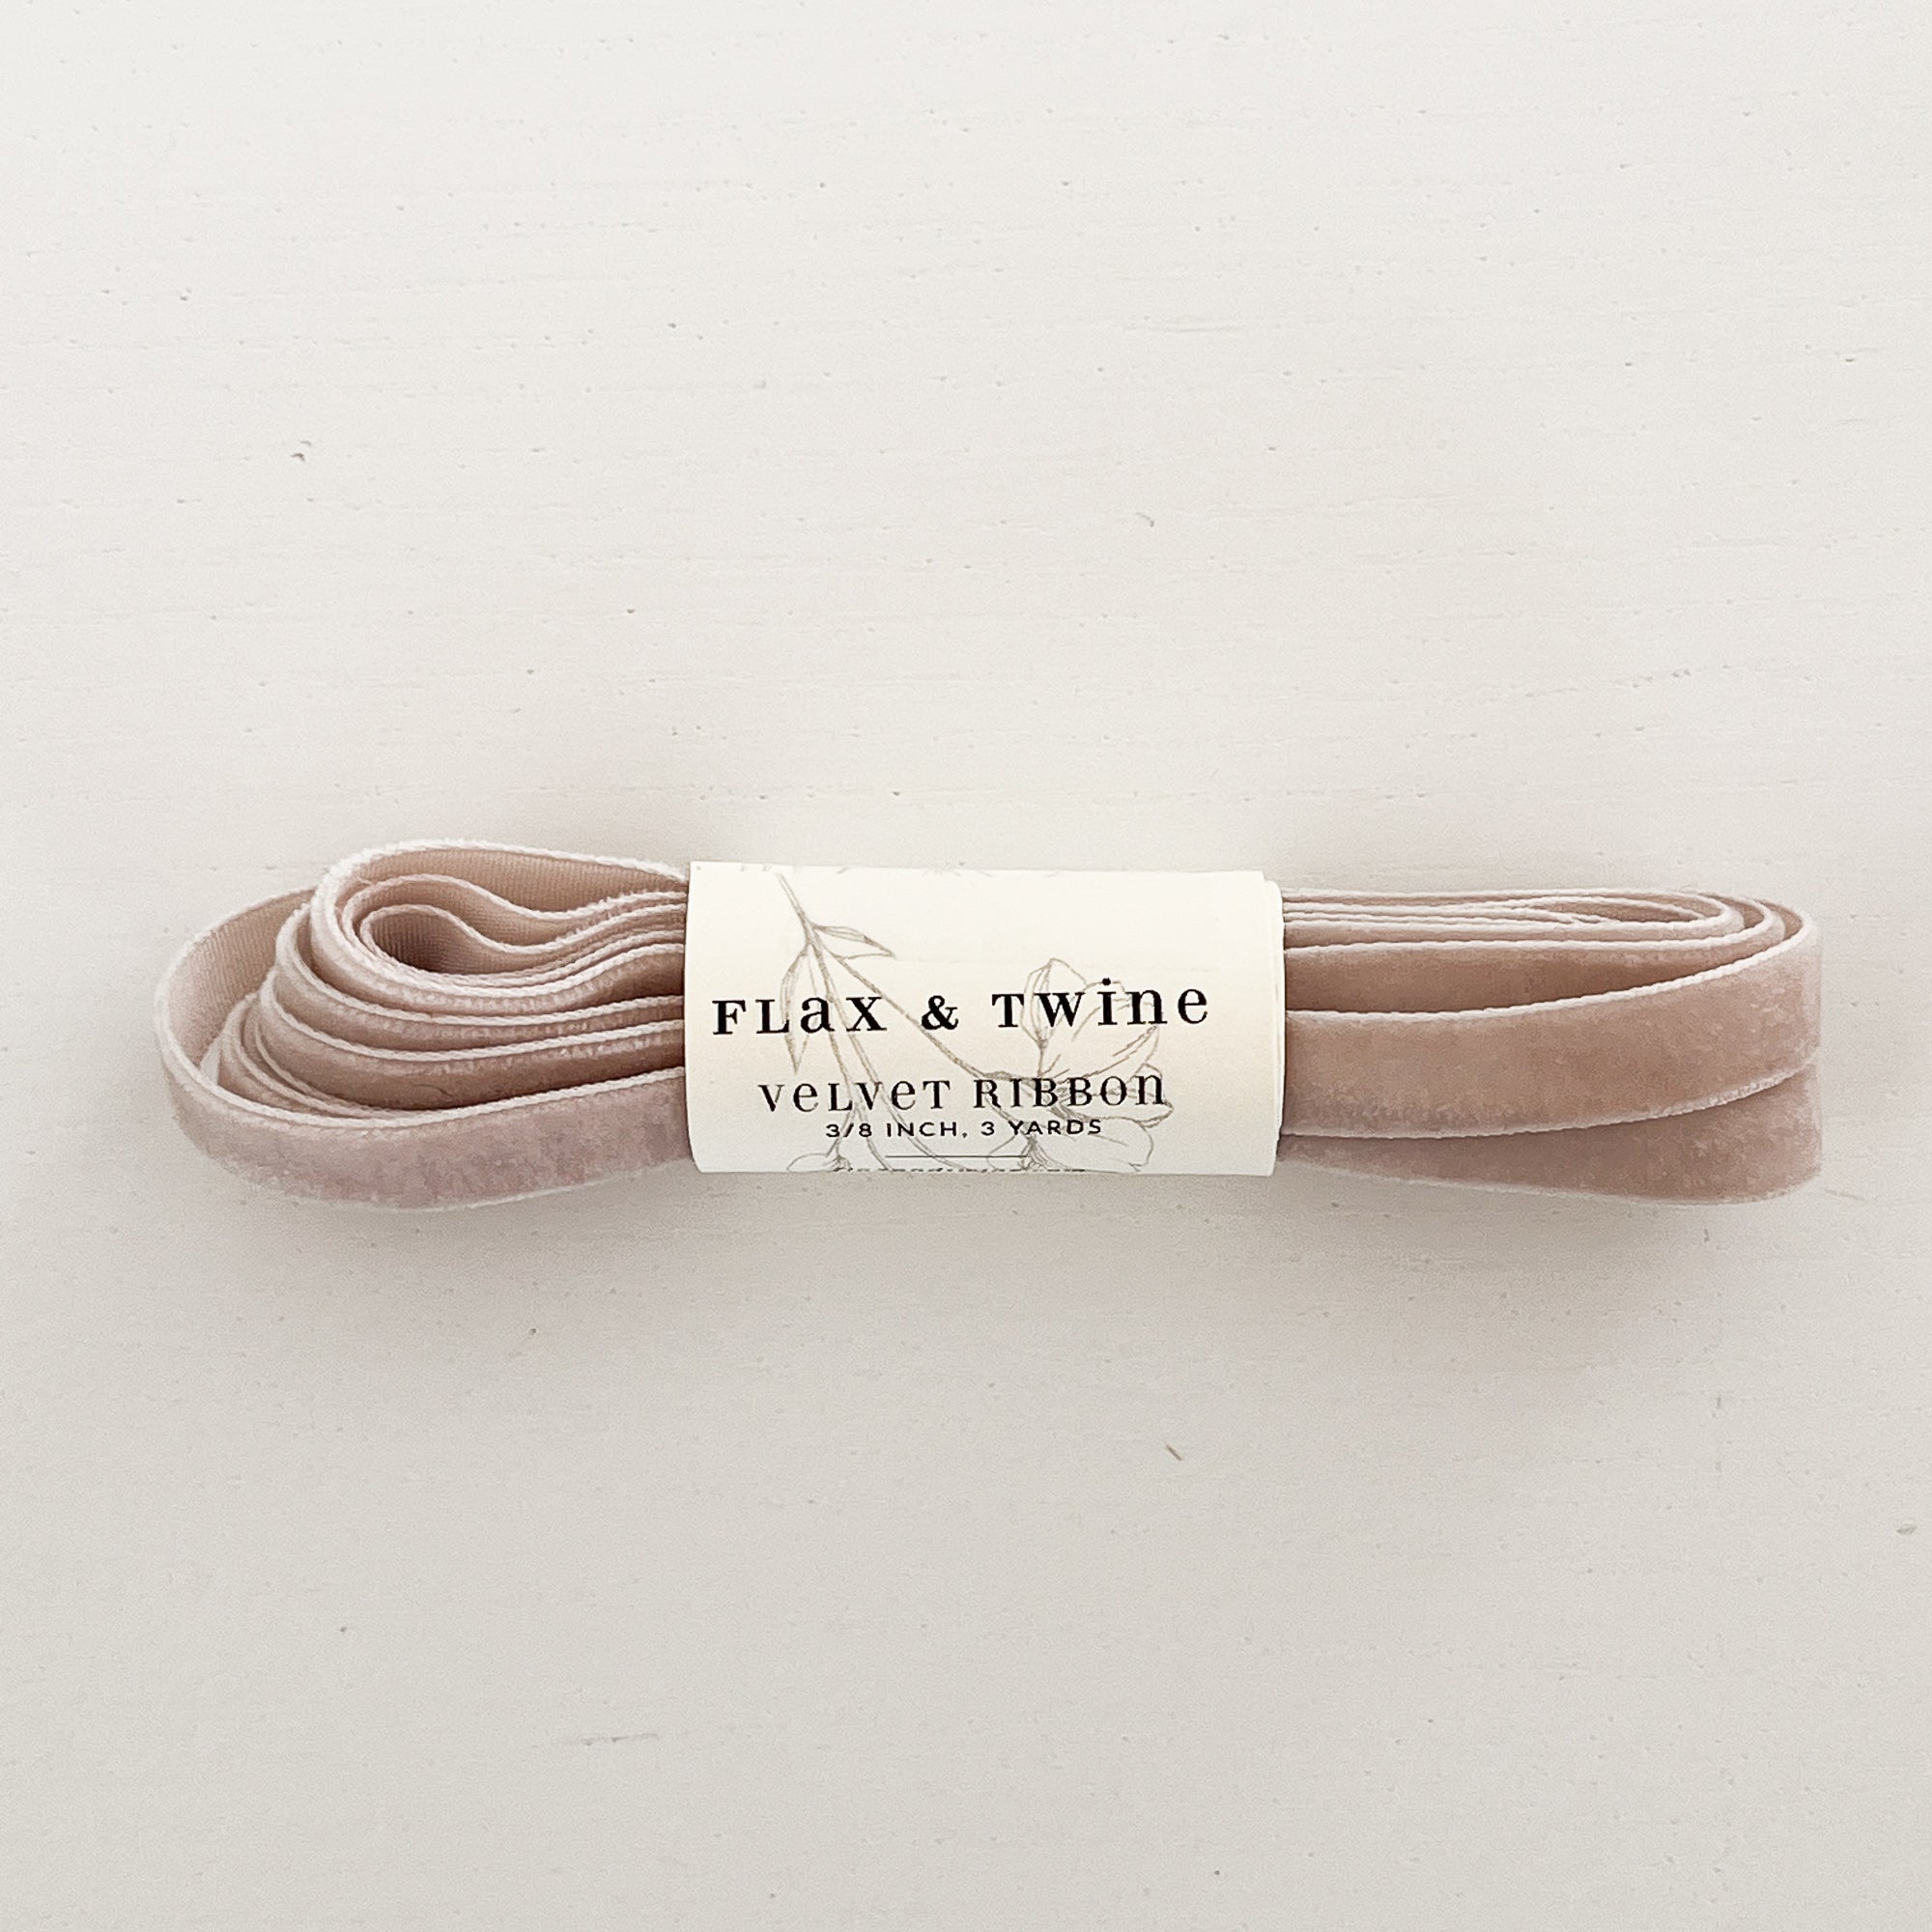 Flax & Twine Velvet Ribbon 3/8 Inch